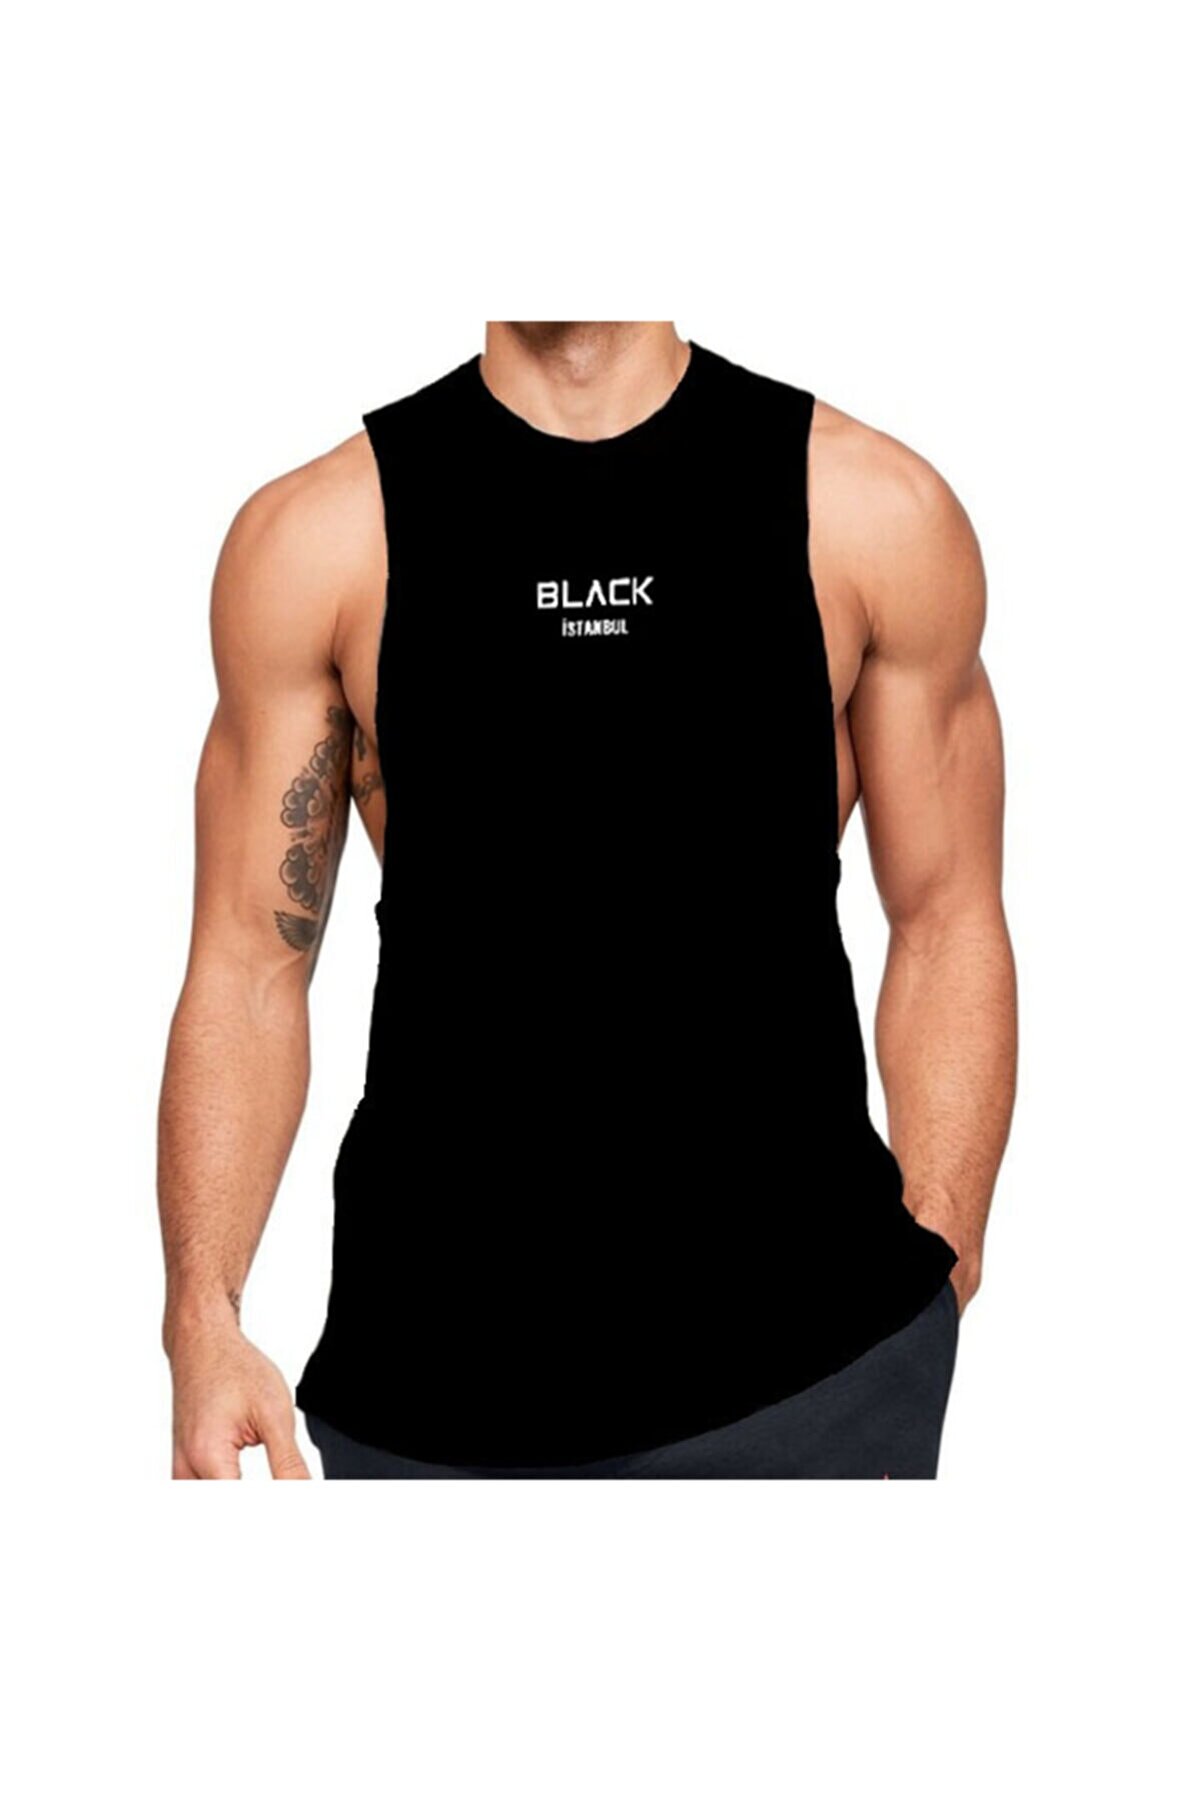 BLACK - Istanbul Fitness Atleti